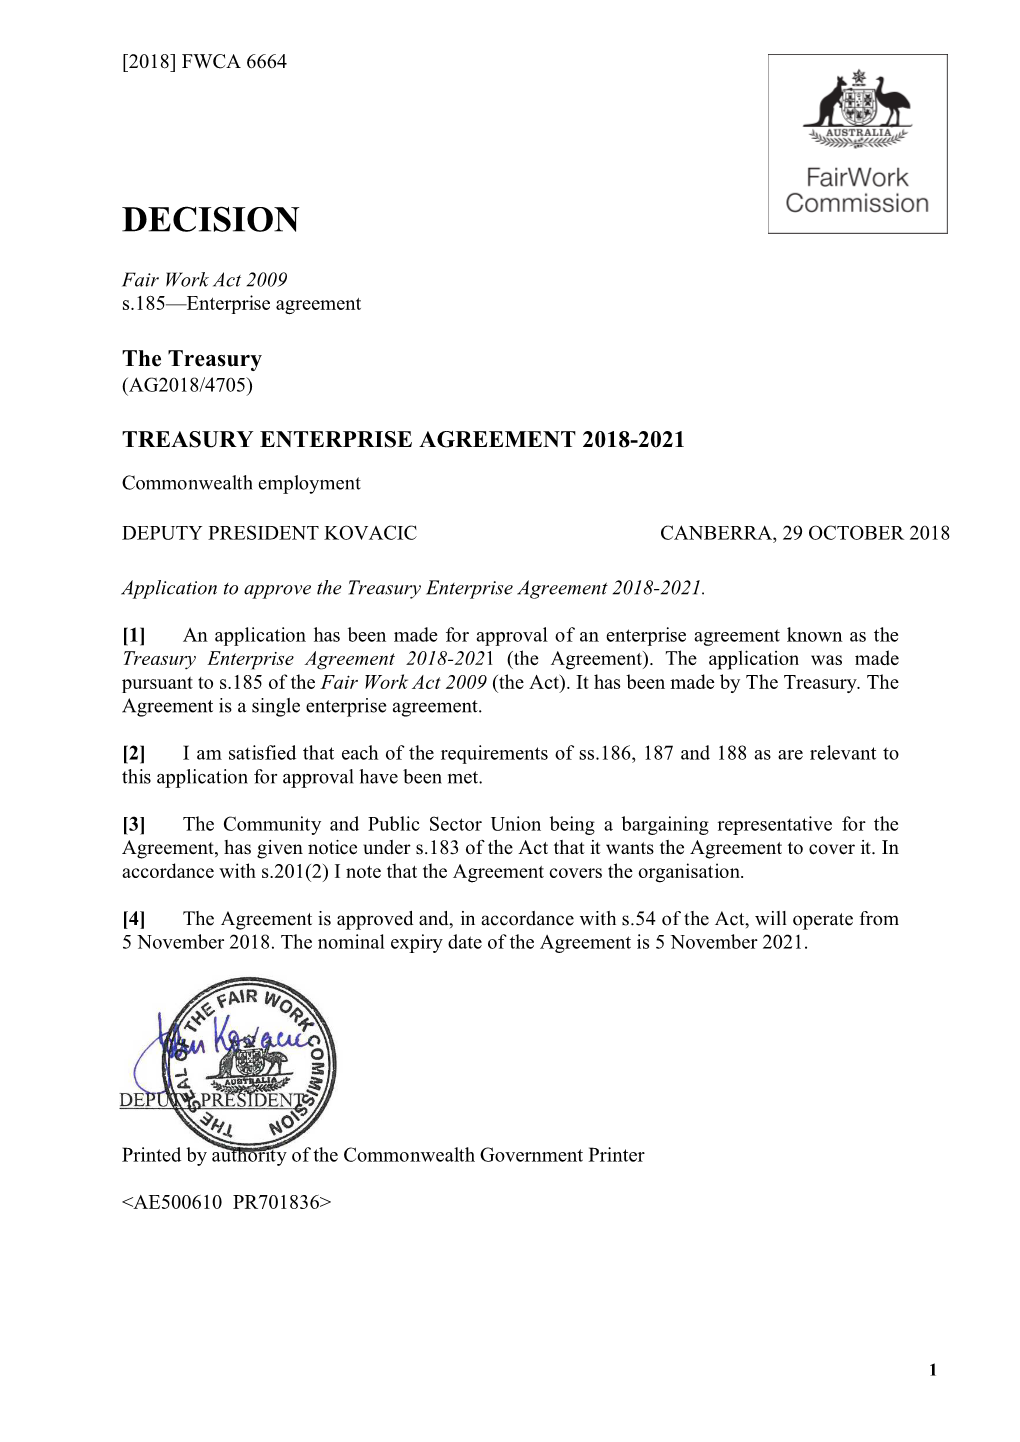 Treasury Enterprise Agreement 2018-2021